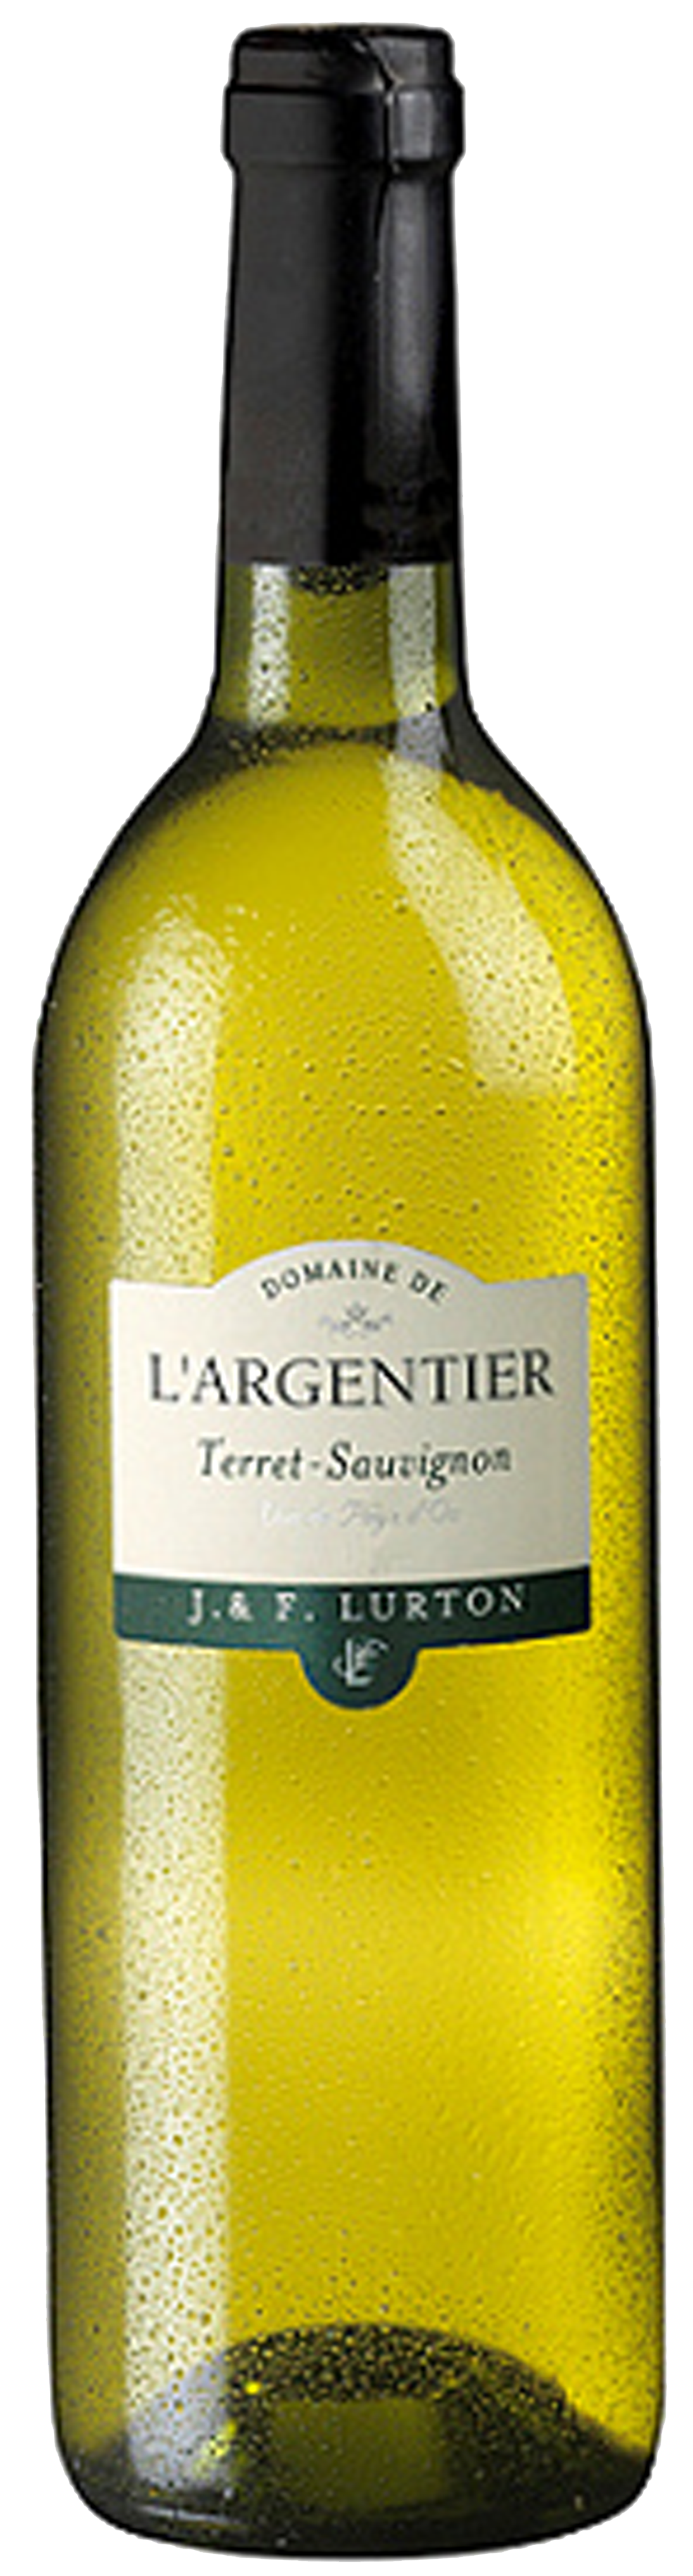 Bottle shot of 2006 Terret Sauvignon